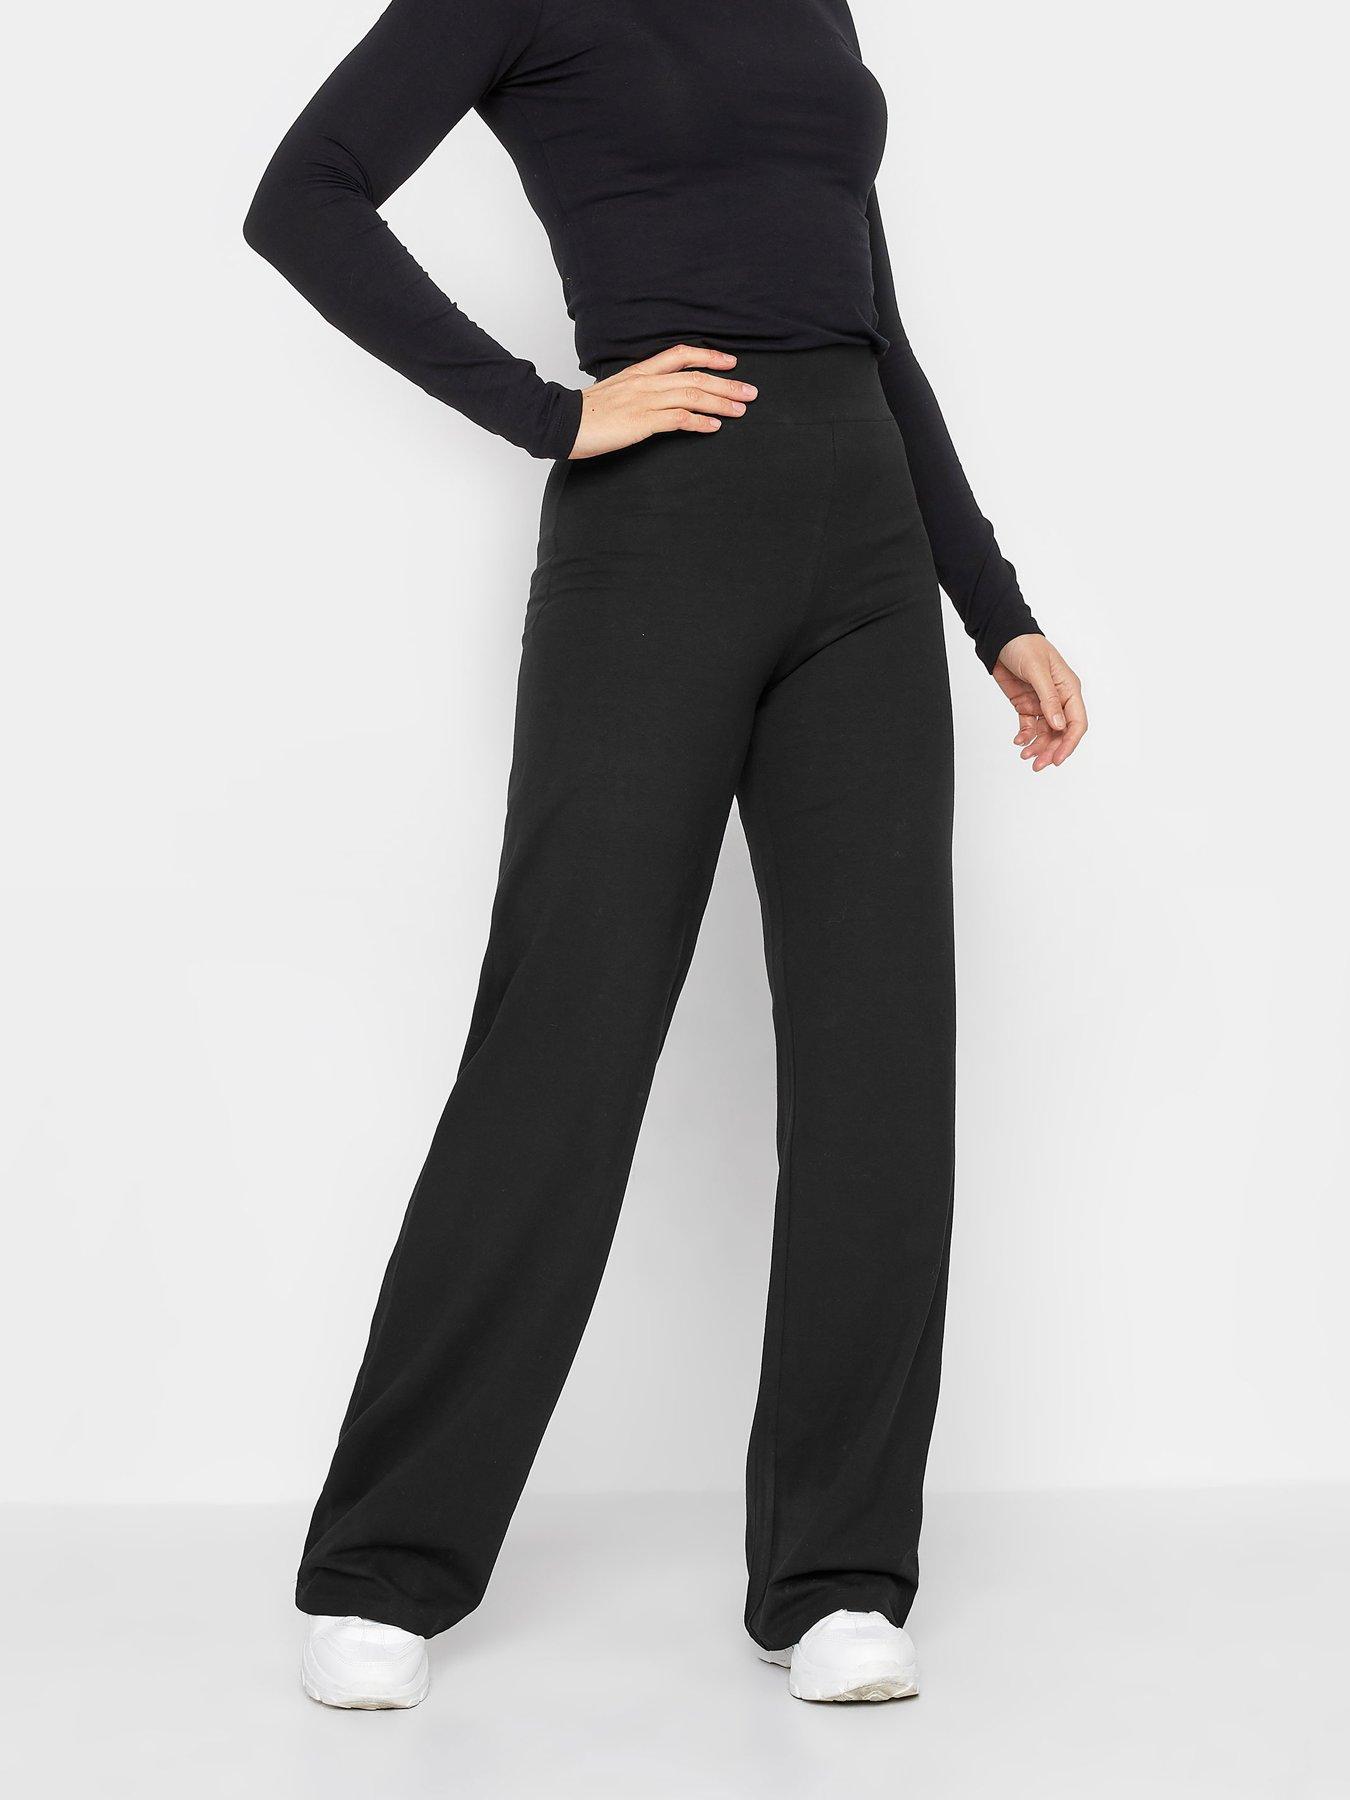 Women's Super Soft Elastic Waistband Scuba Pants Black Small - White Mark